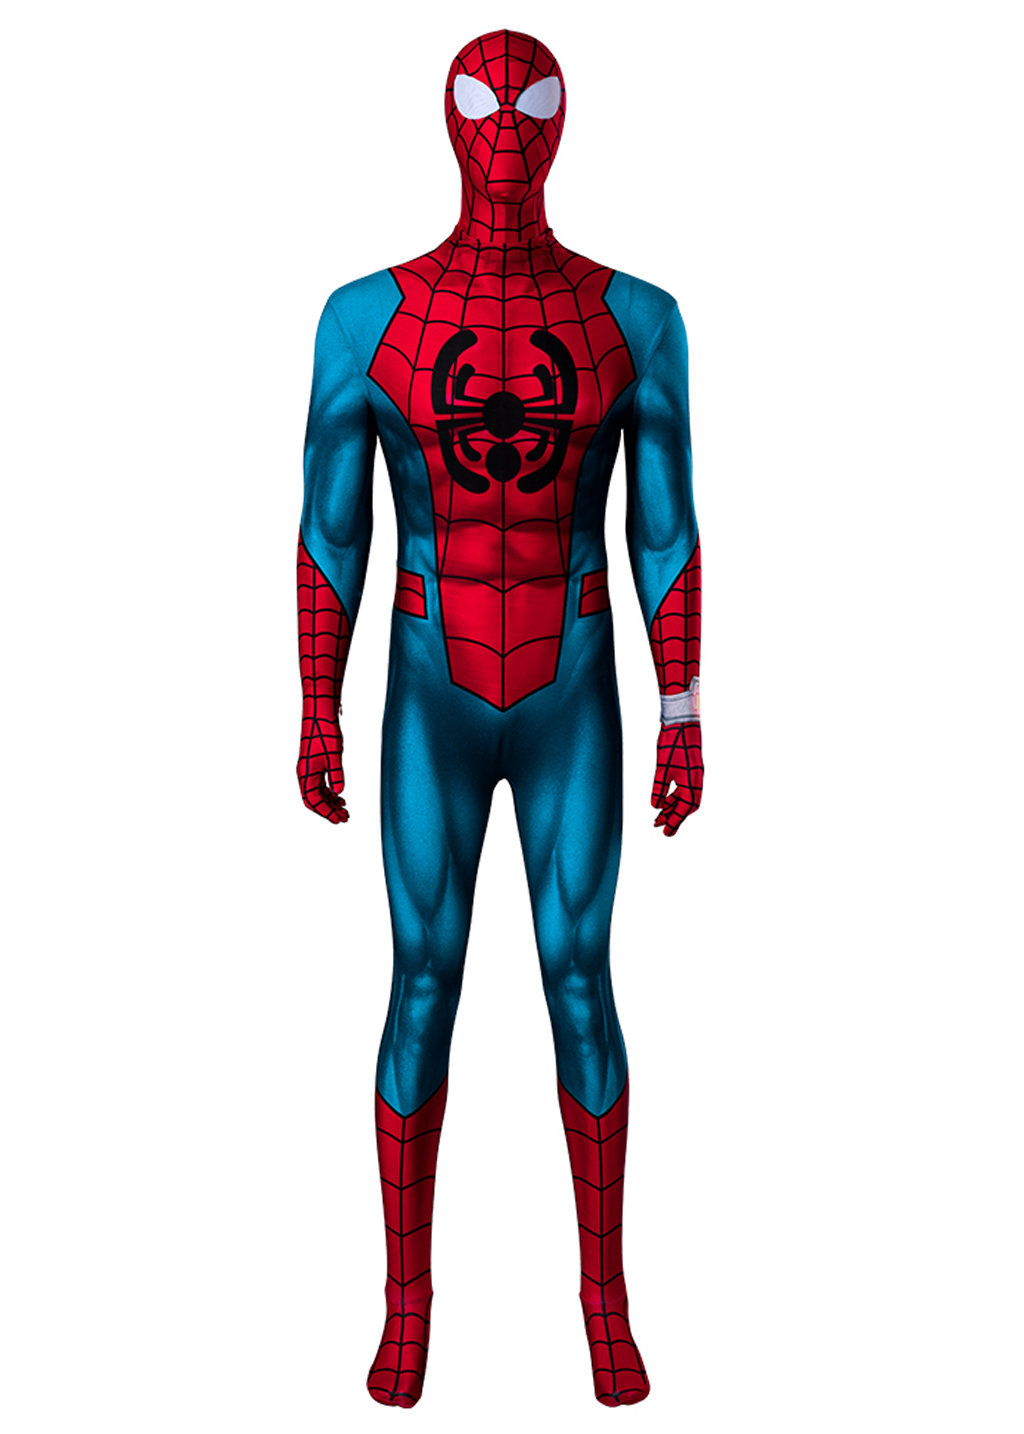 Spider-Man Bodysuit Costume Across The Spider-Verse Suit Cosplay